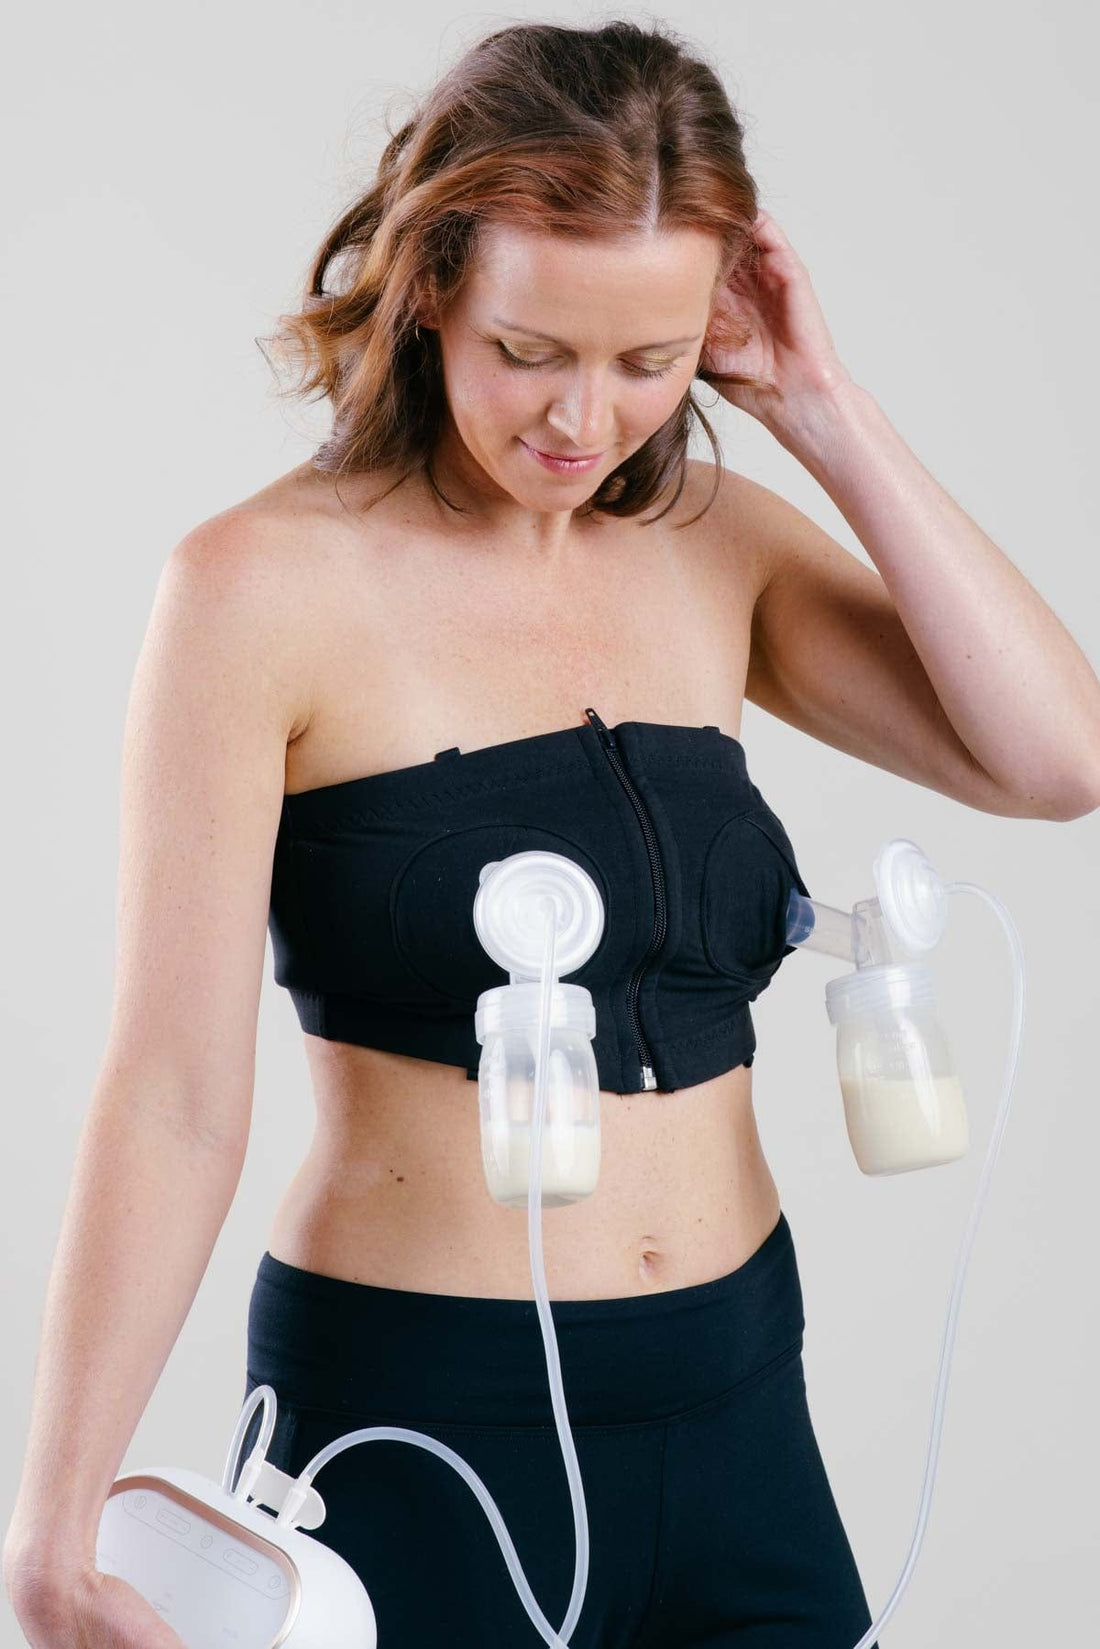 SISU MUM MODERN SOLUTIONS FOR PUMPING & NURSING Hands Free Pumping &  Nursing Bra - Lightly Padded T-Shirt Bra - Wireless